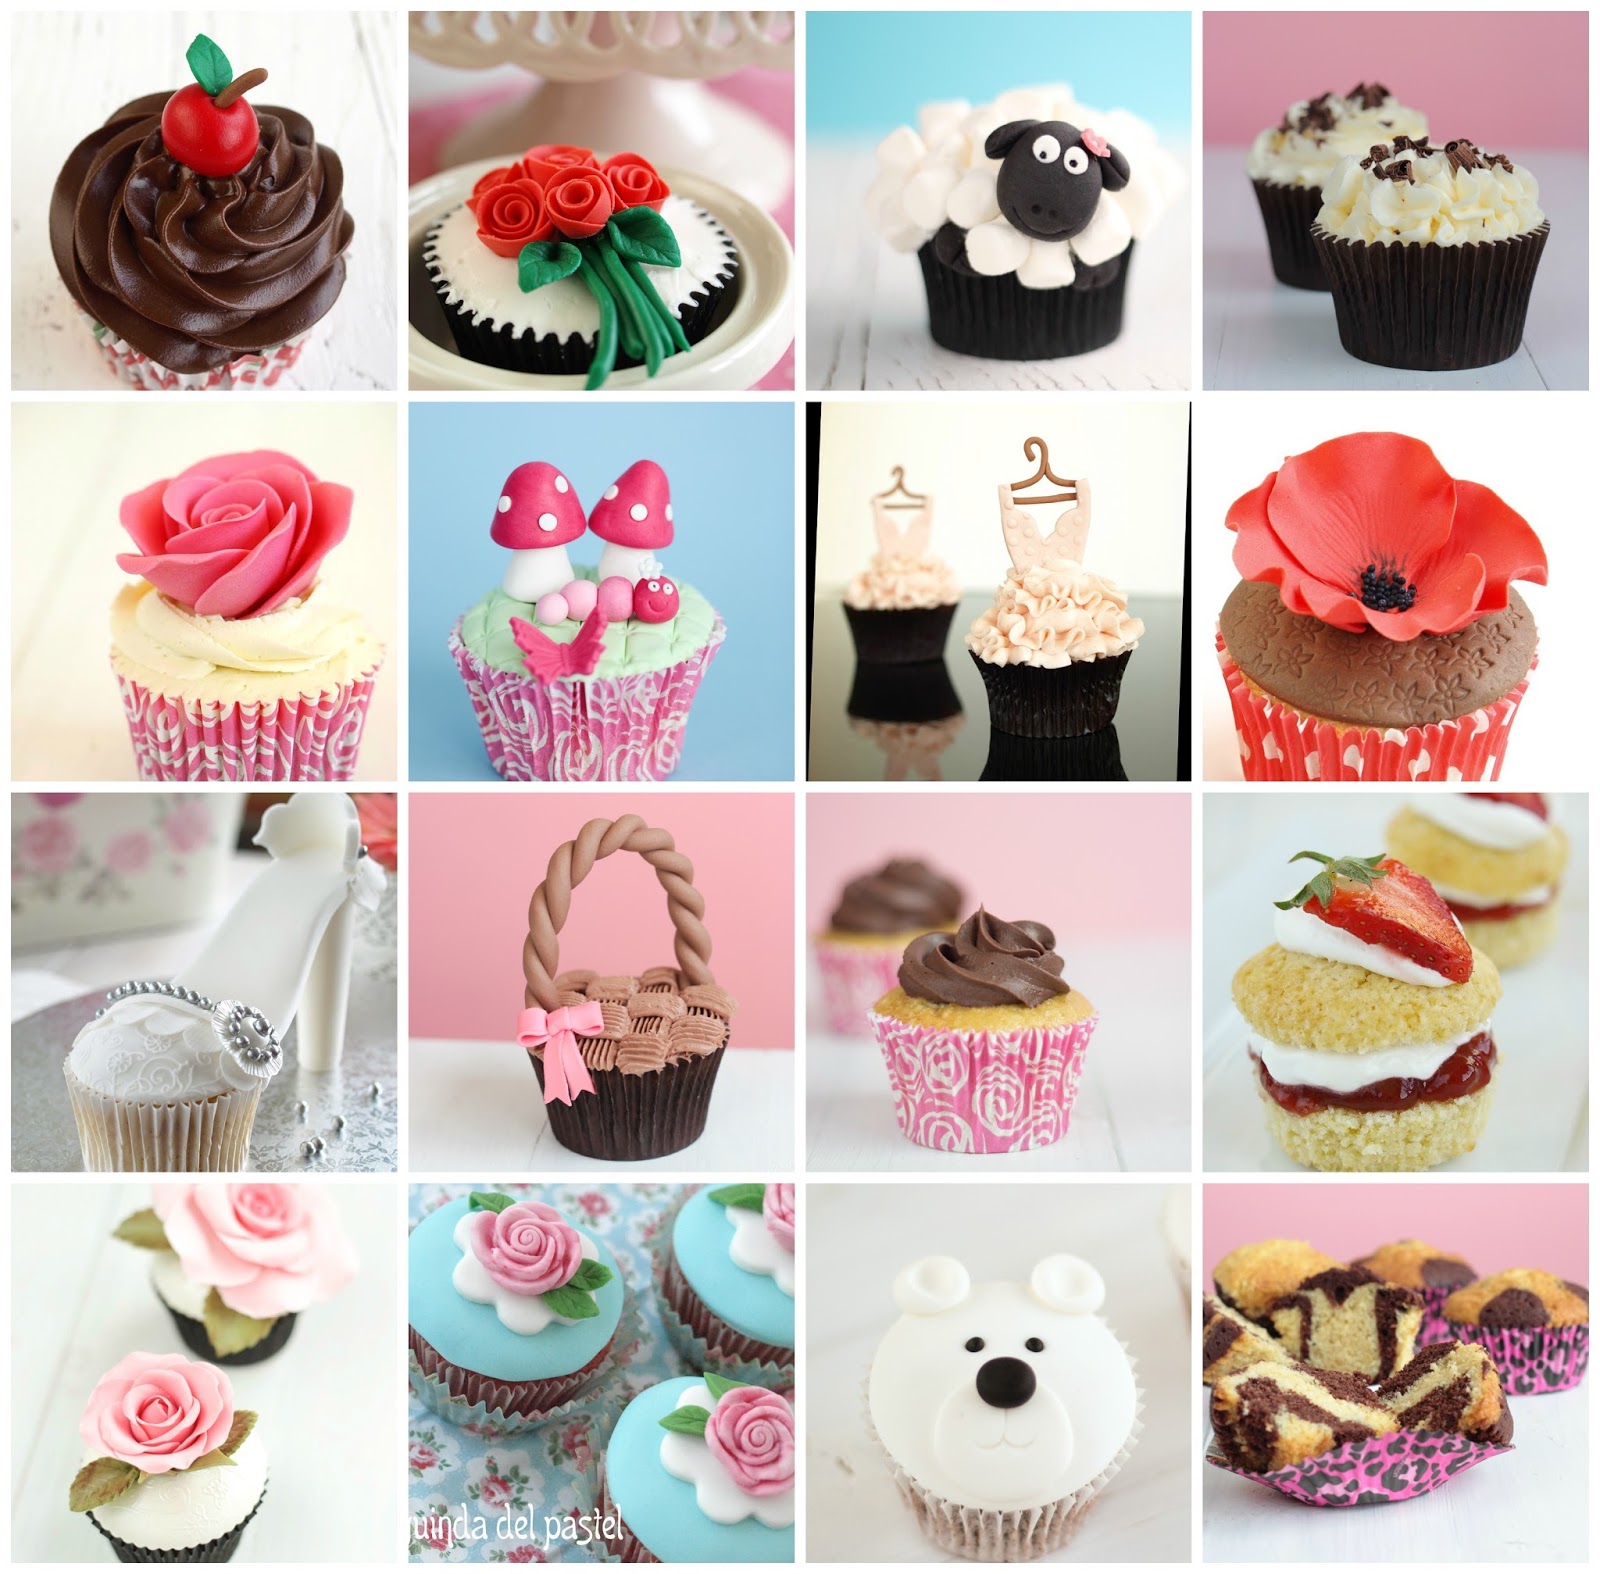 La guinda del pastel: Cupcakes